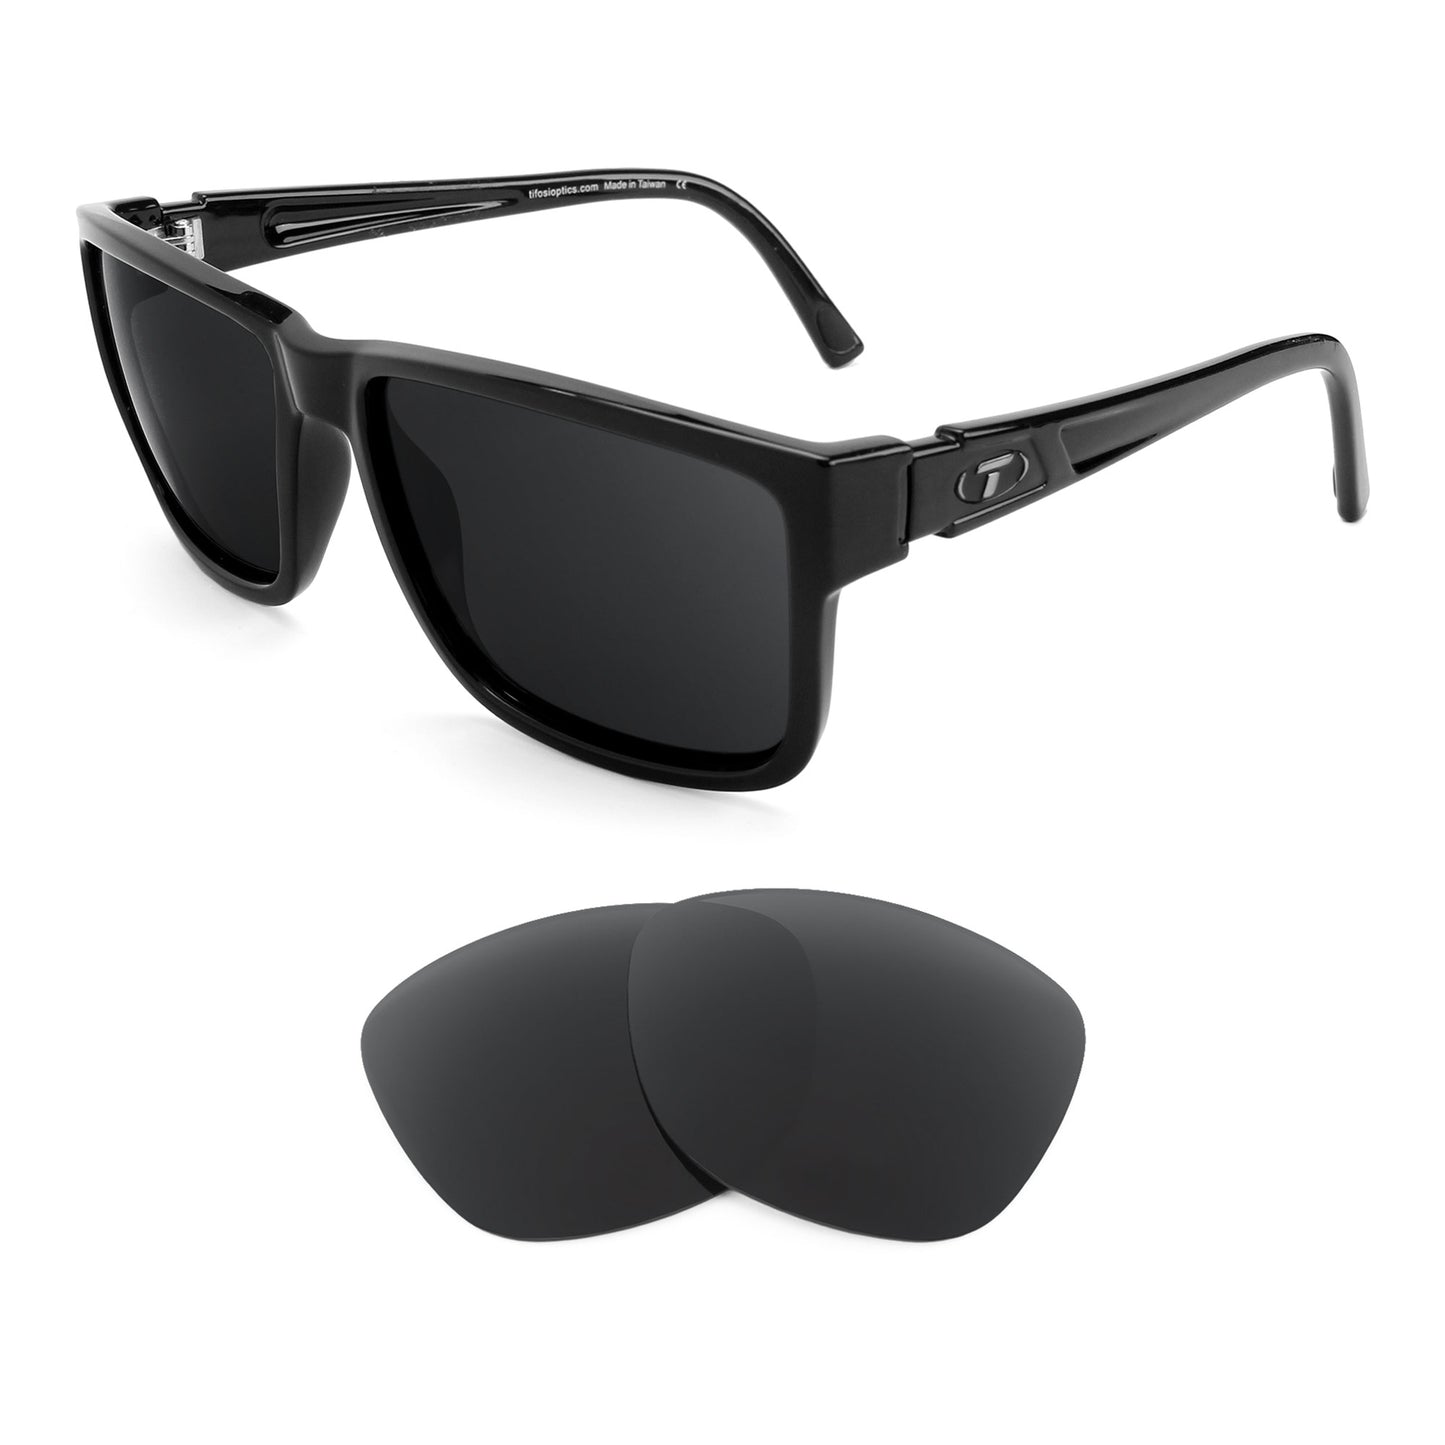 Tifosi Hagen XL sunglasses with replacement lenses